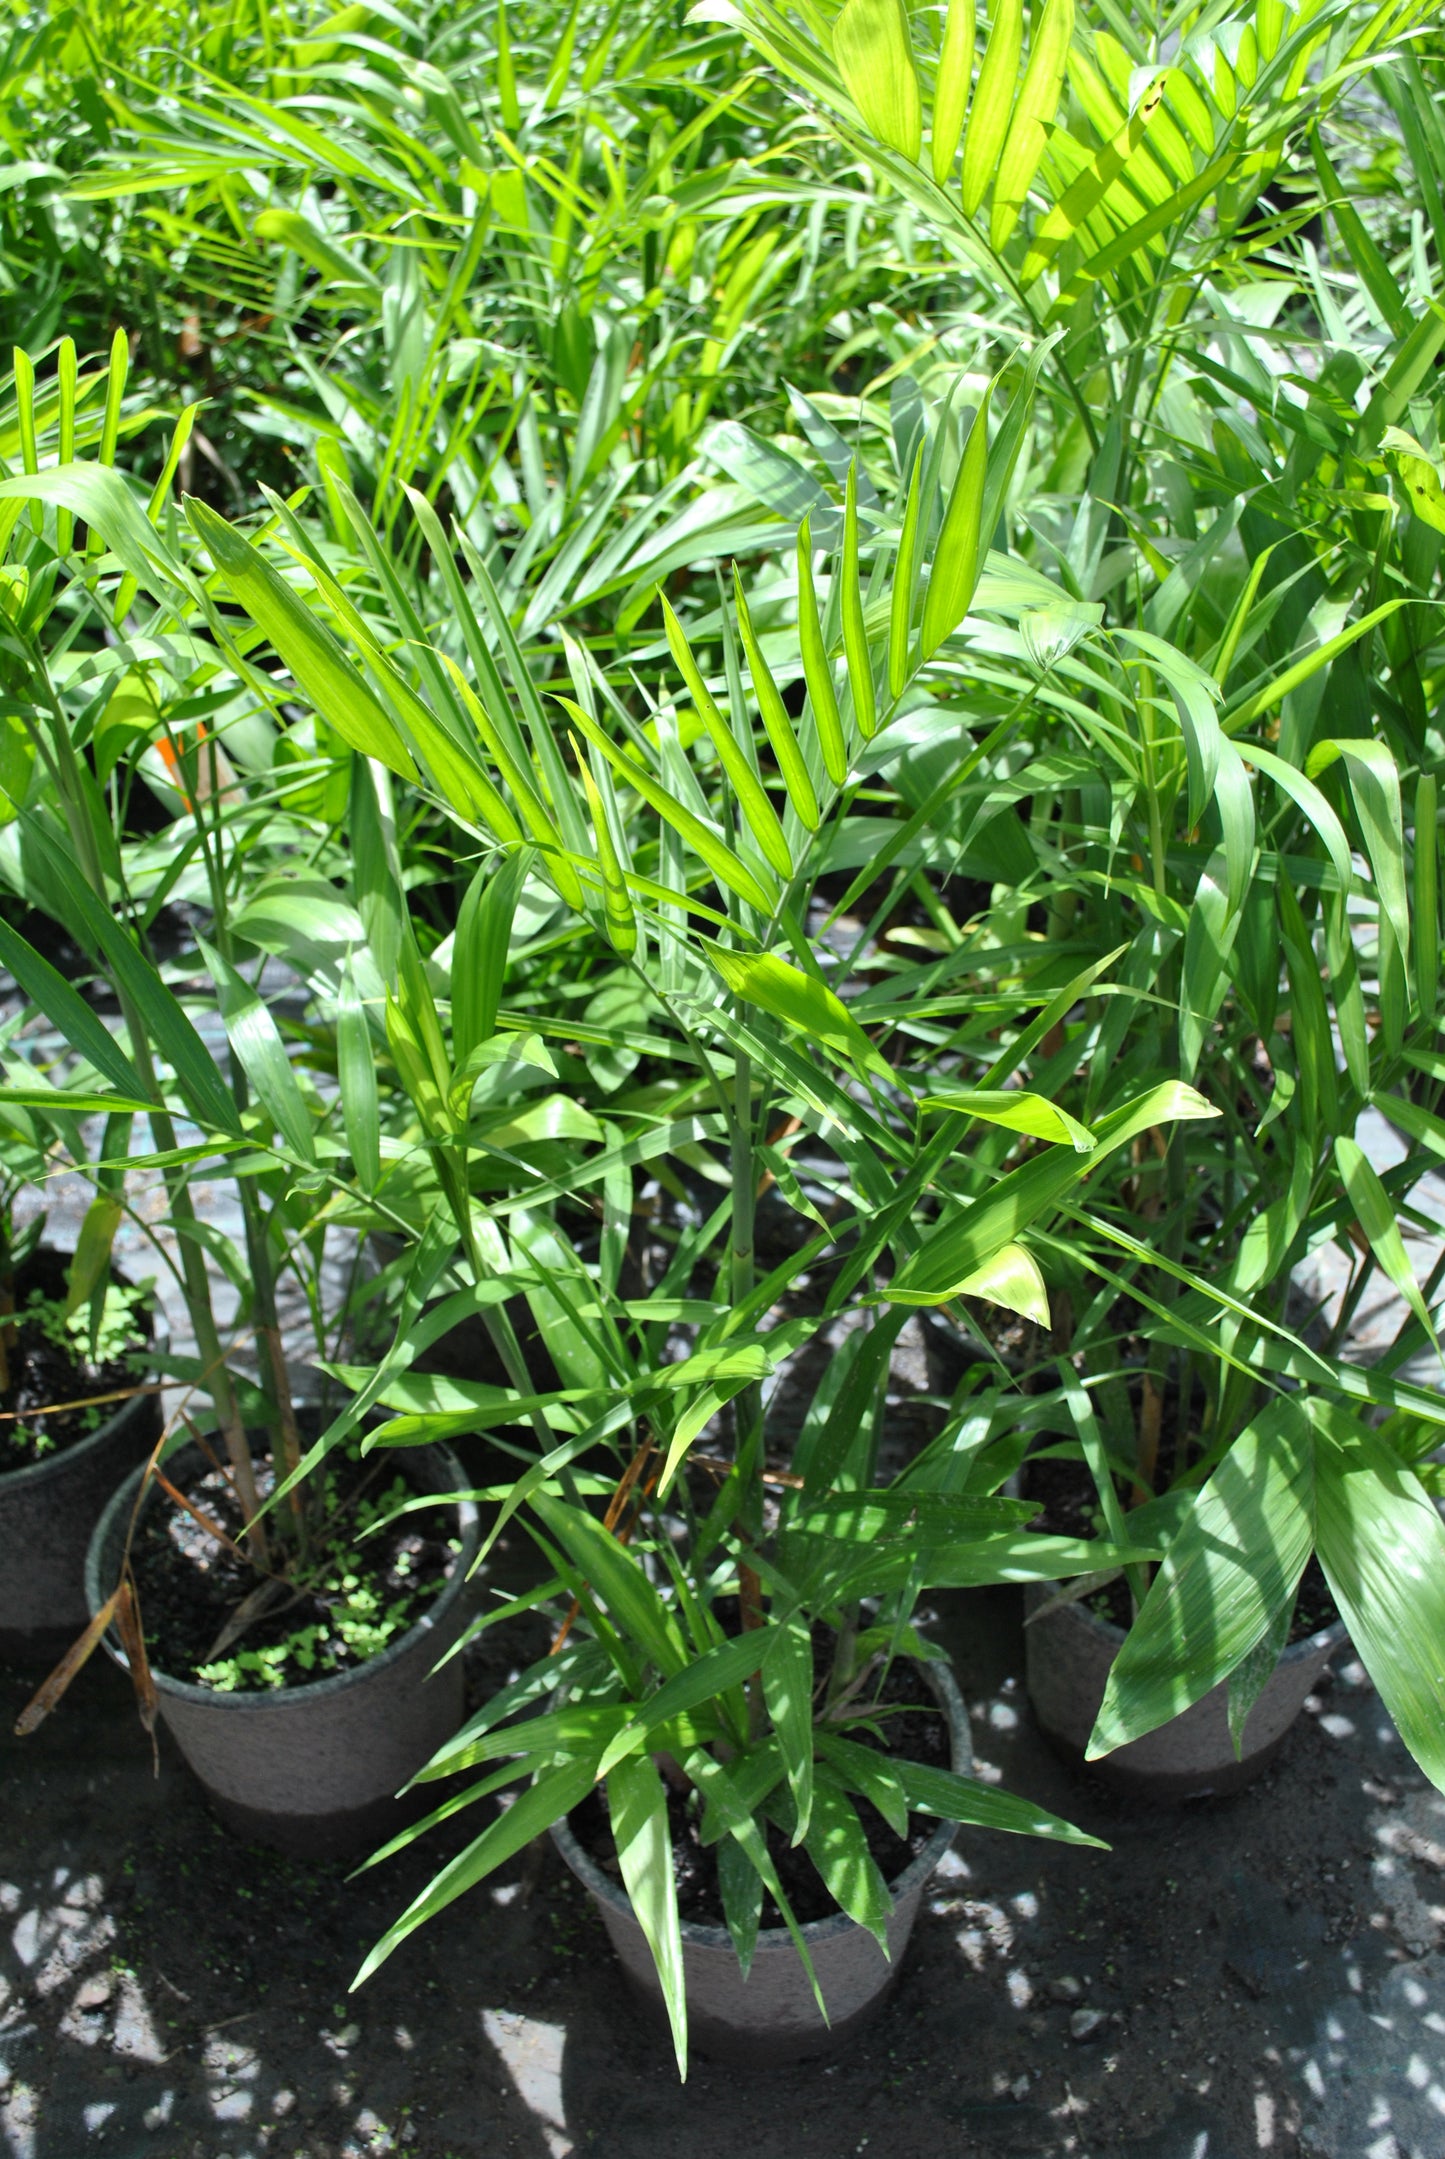 Many Chamaedorea atrovirens 'Cascade Palm' plants together creating a tropical feel